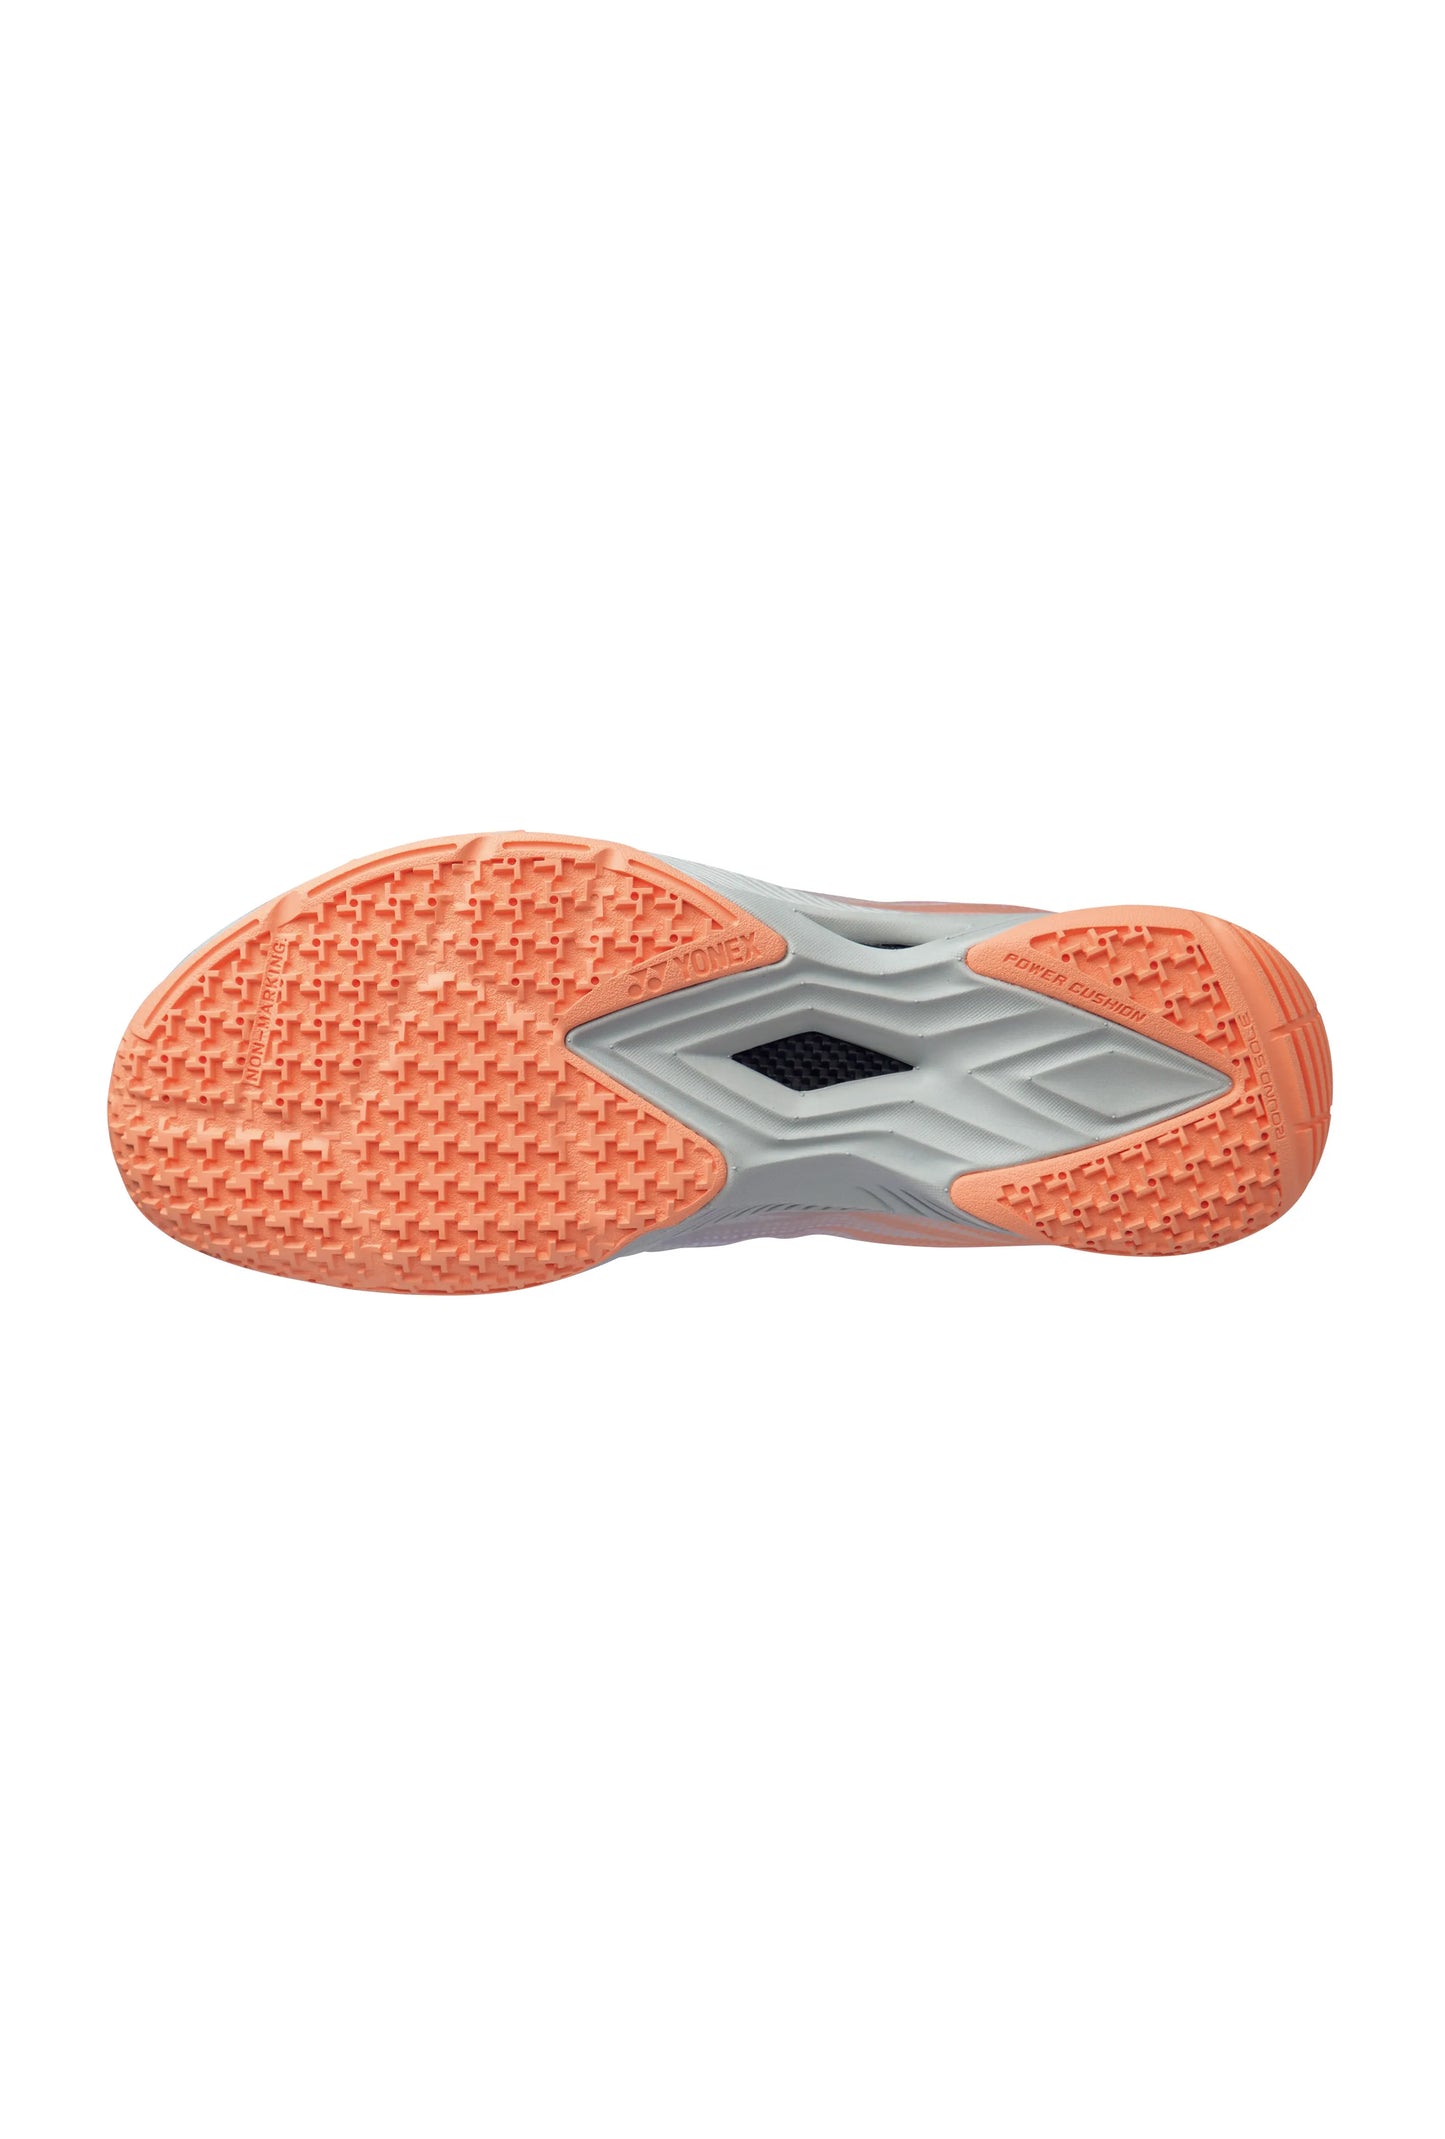 YONEX Badminton Shoes POWER CUSHION AERUS Z2 WOMEN [Coral] - Max Sports